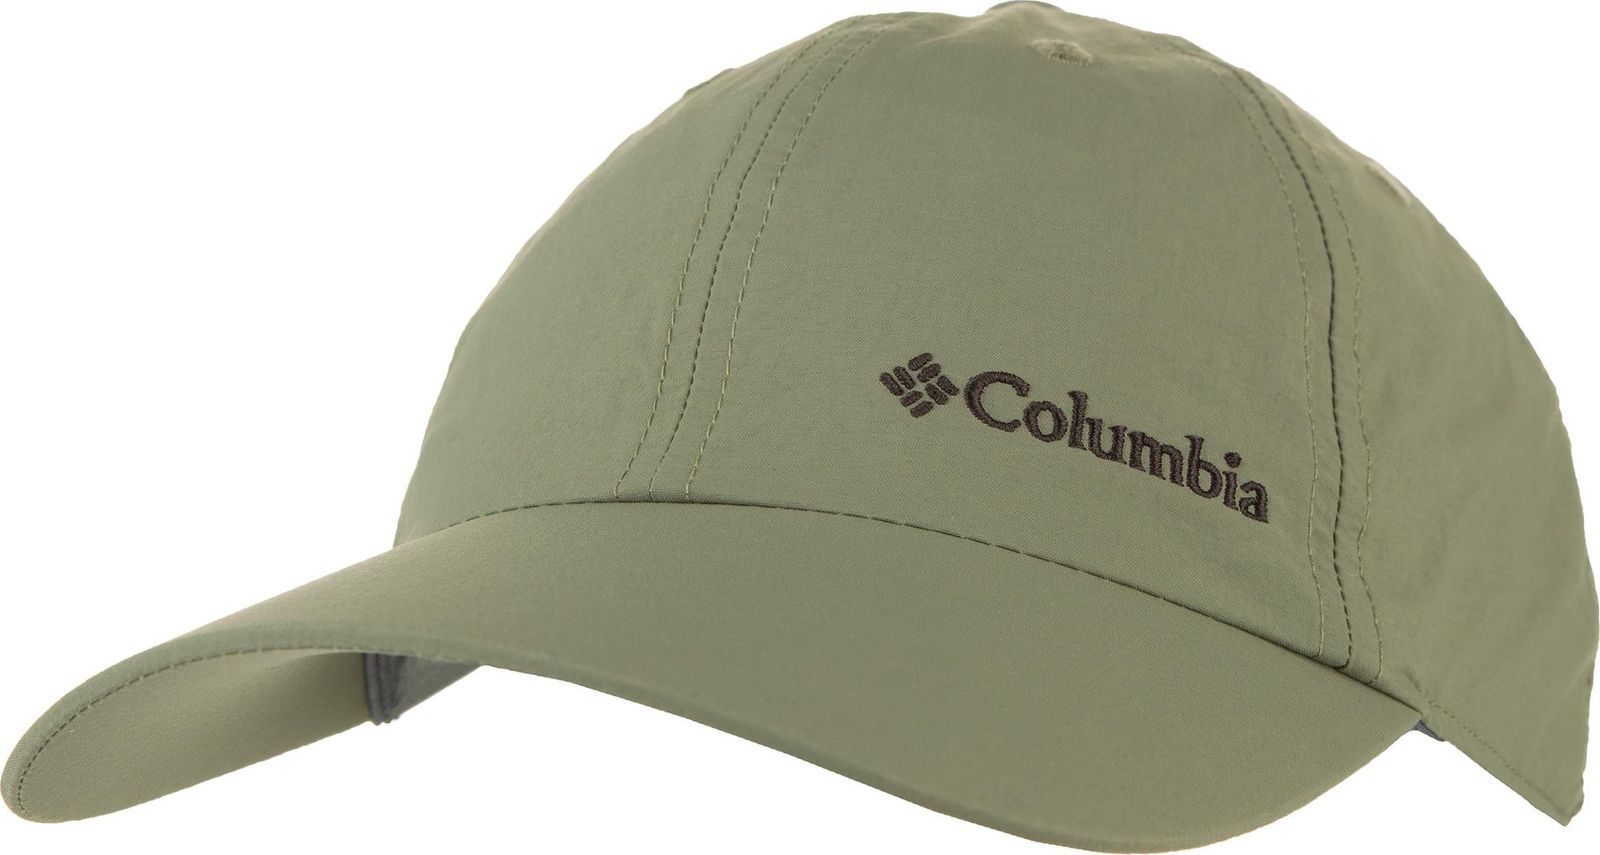  Columbia Tech Shade II Hat, : . 1819641-316.  